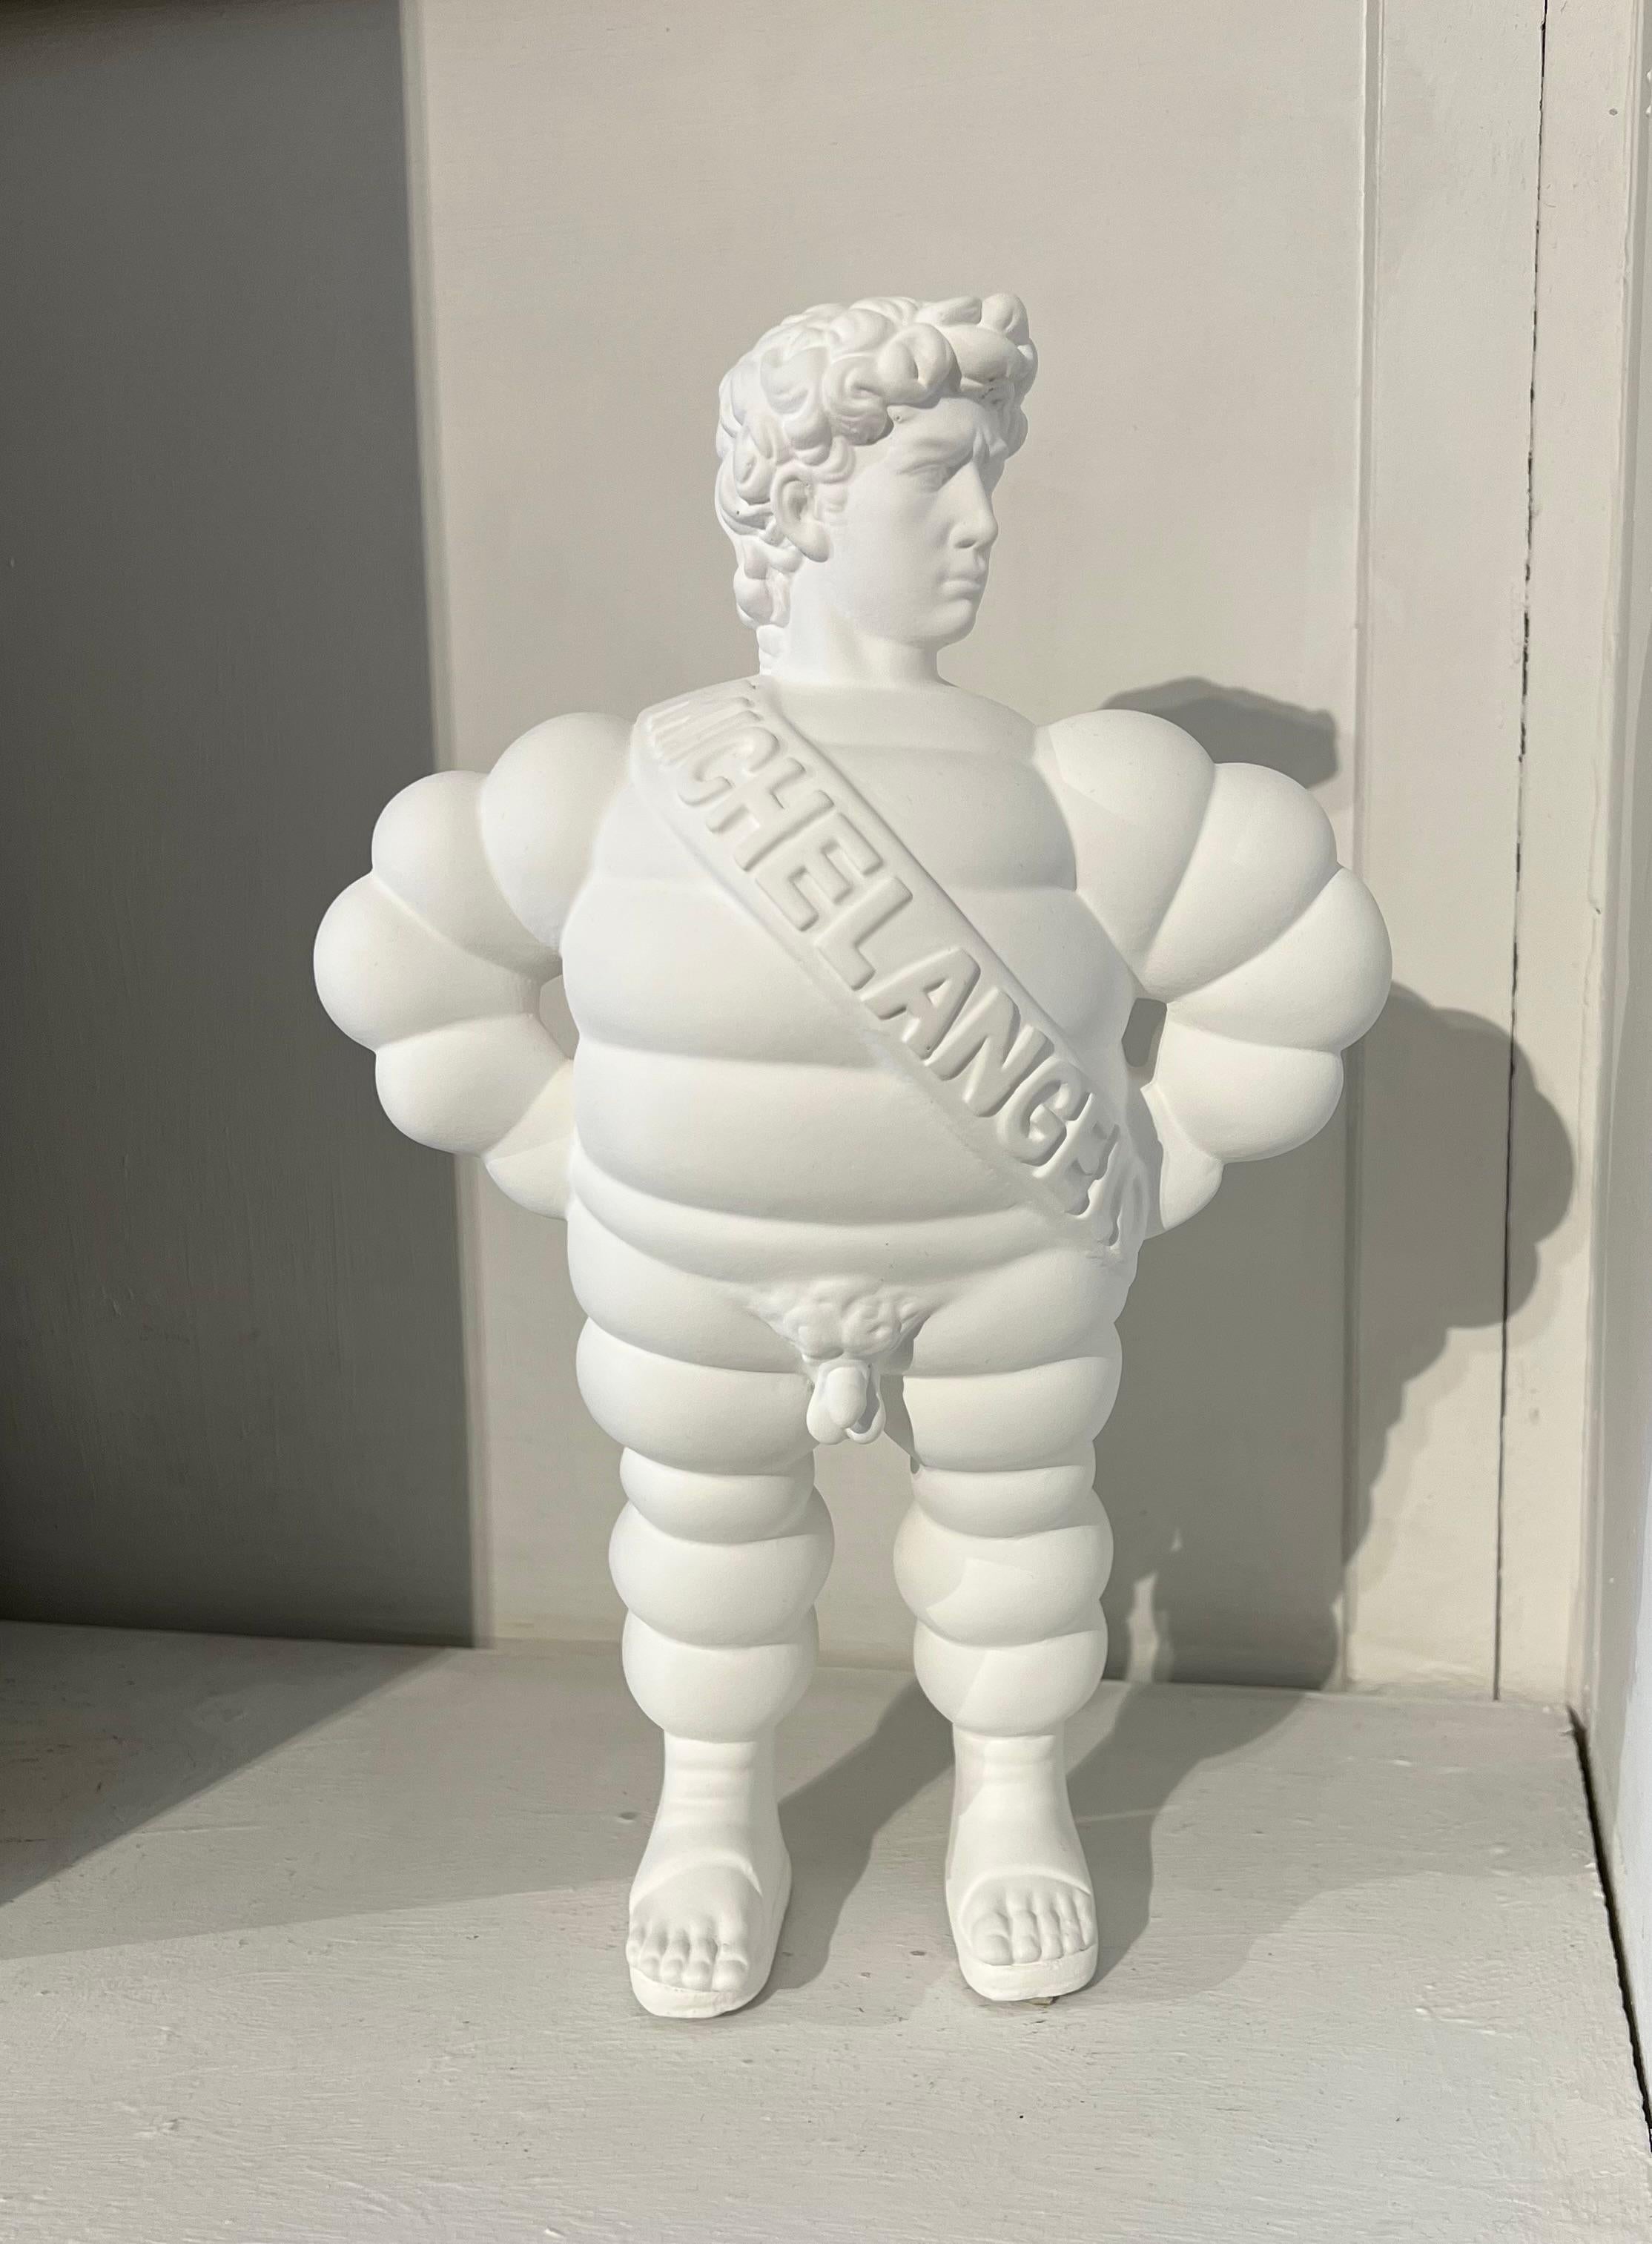 Figurative Sculpture Francesco de Molfetta - Michelangelo pop art sculpture résine blanche contemporaine figurative 